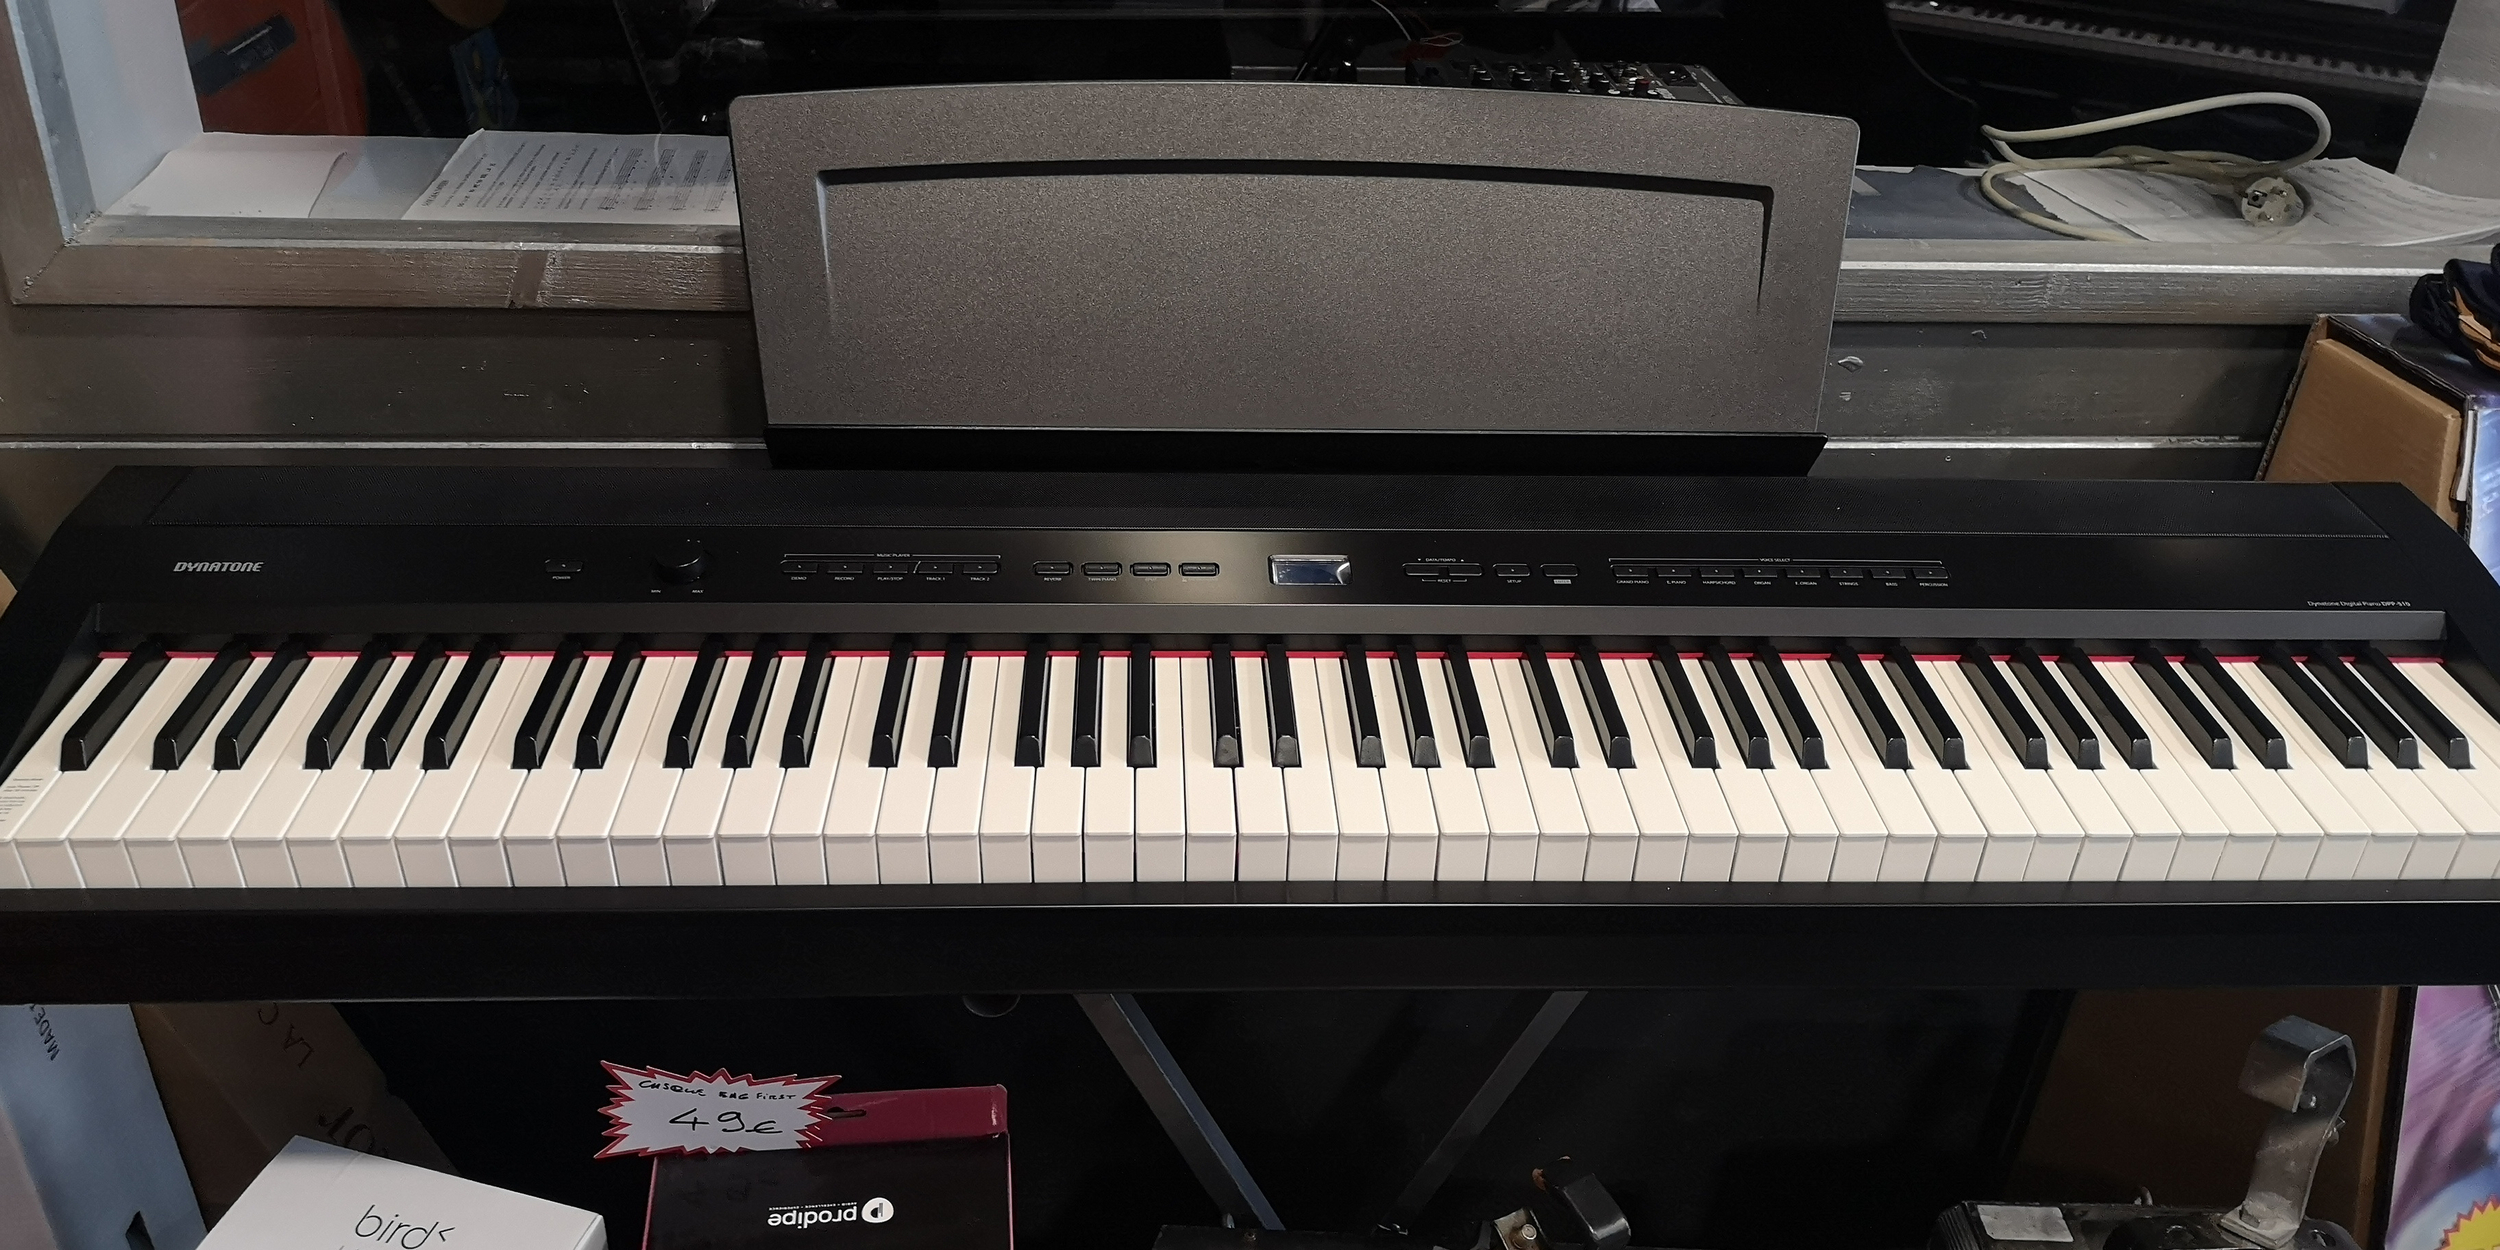 Piano numérique - Medeli - Performer Series SP4200/ BK- Piano